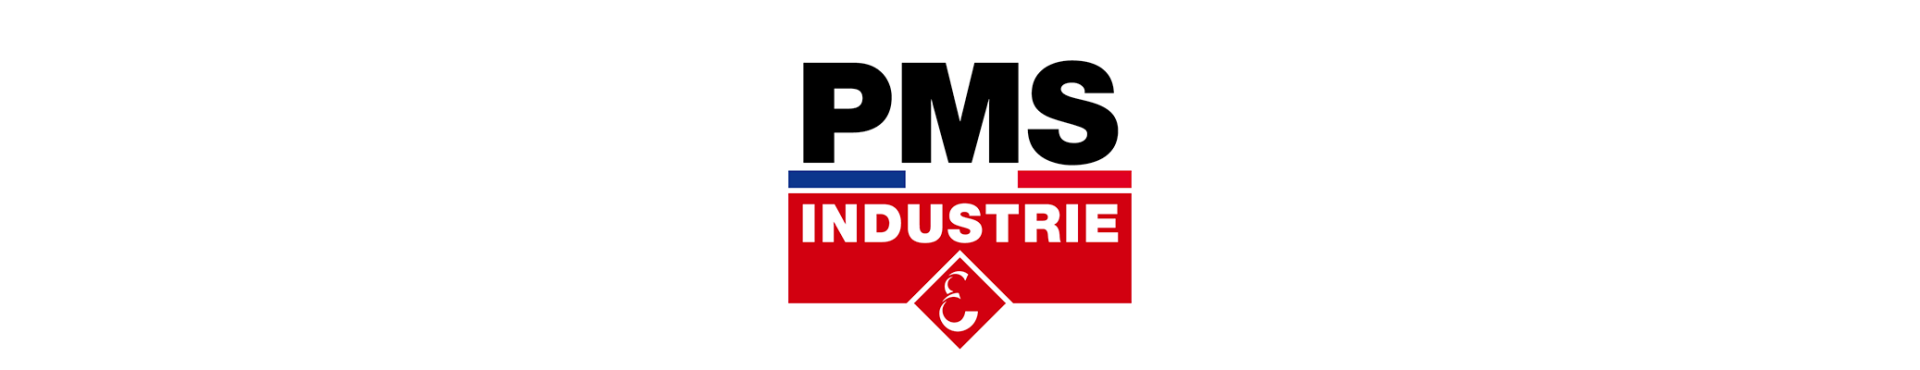 PMS Industries